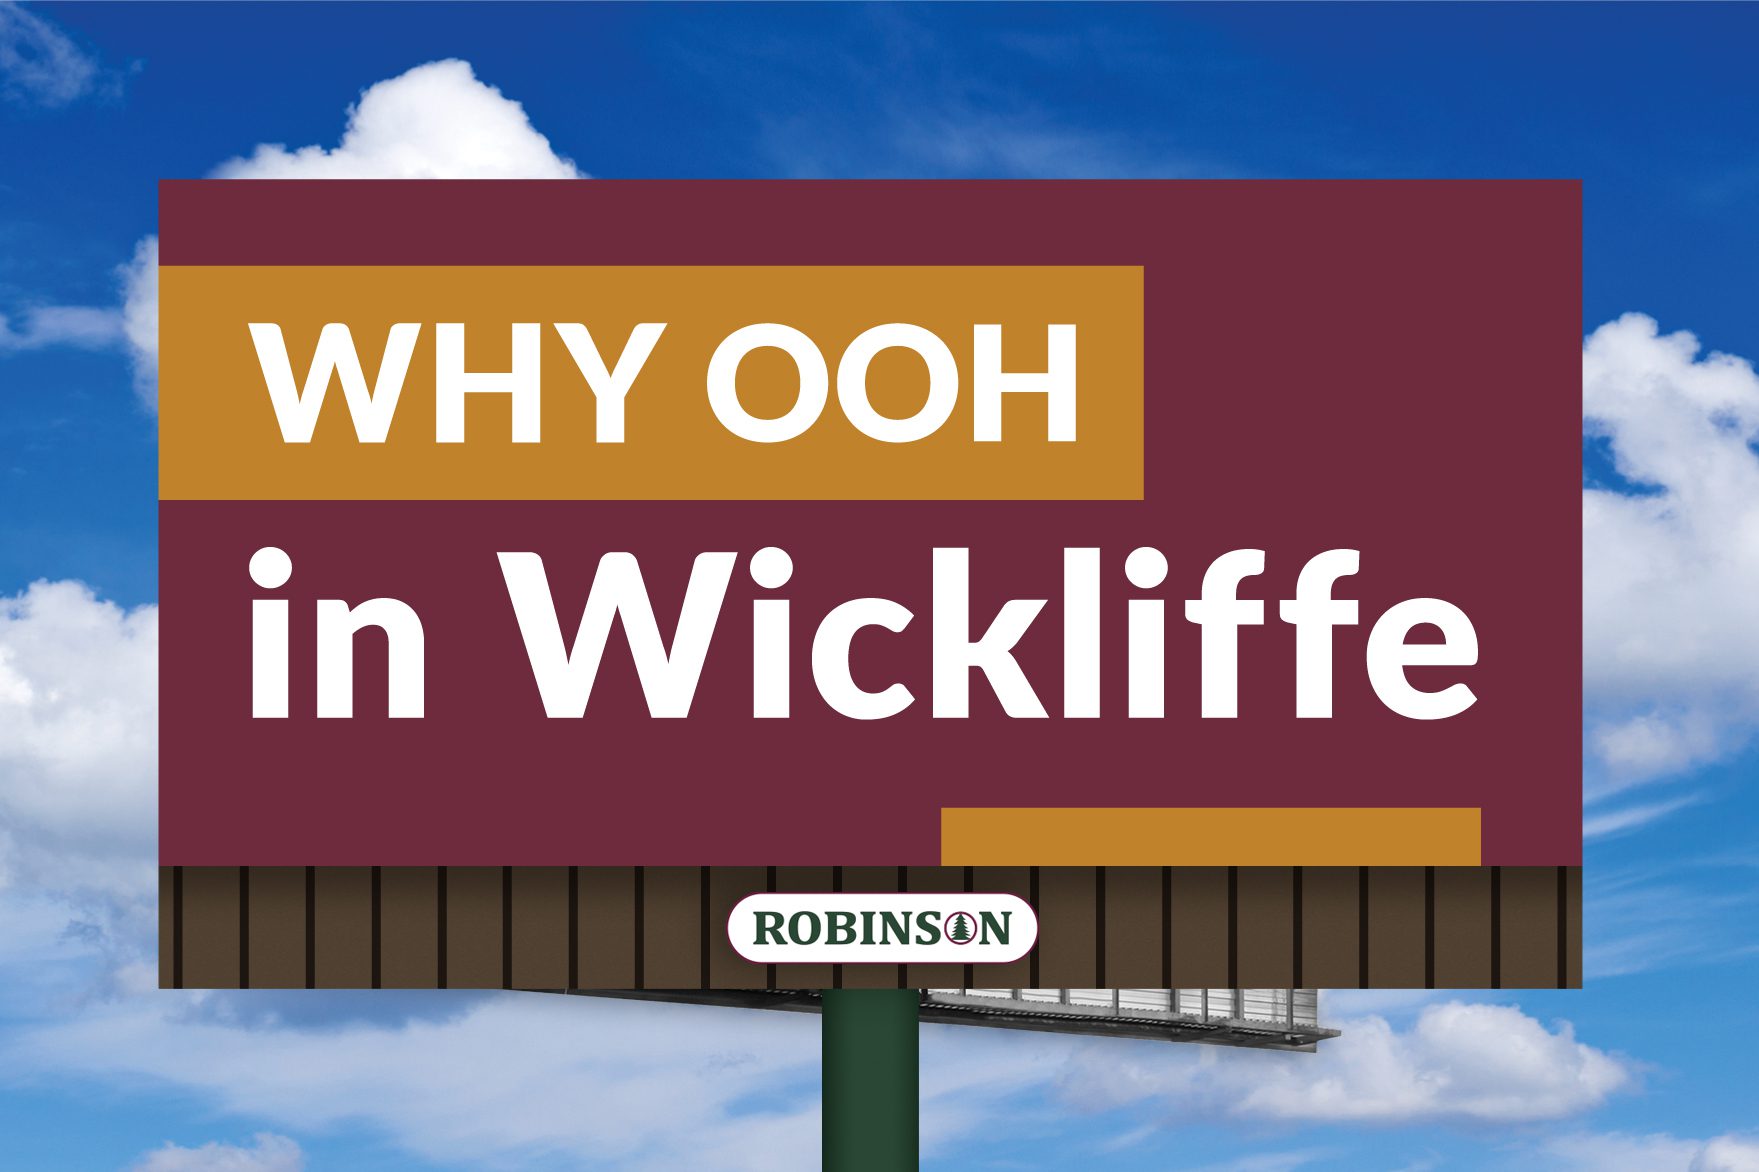 Wickliffe, Kentucky digital billboard advertising